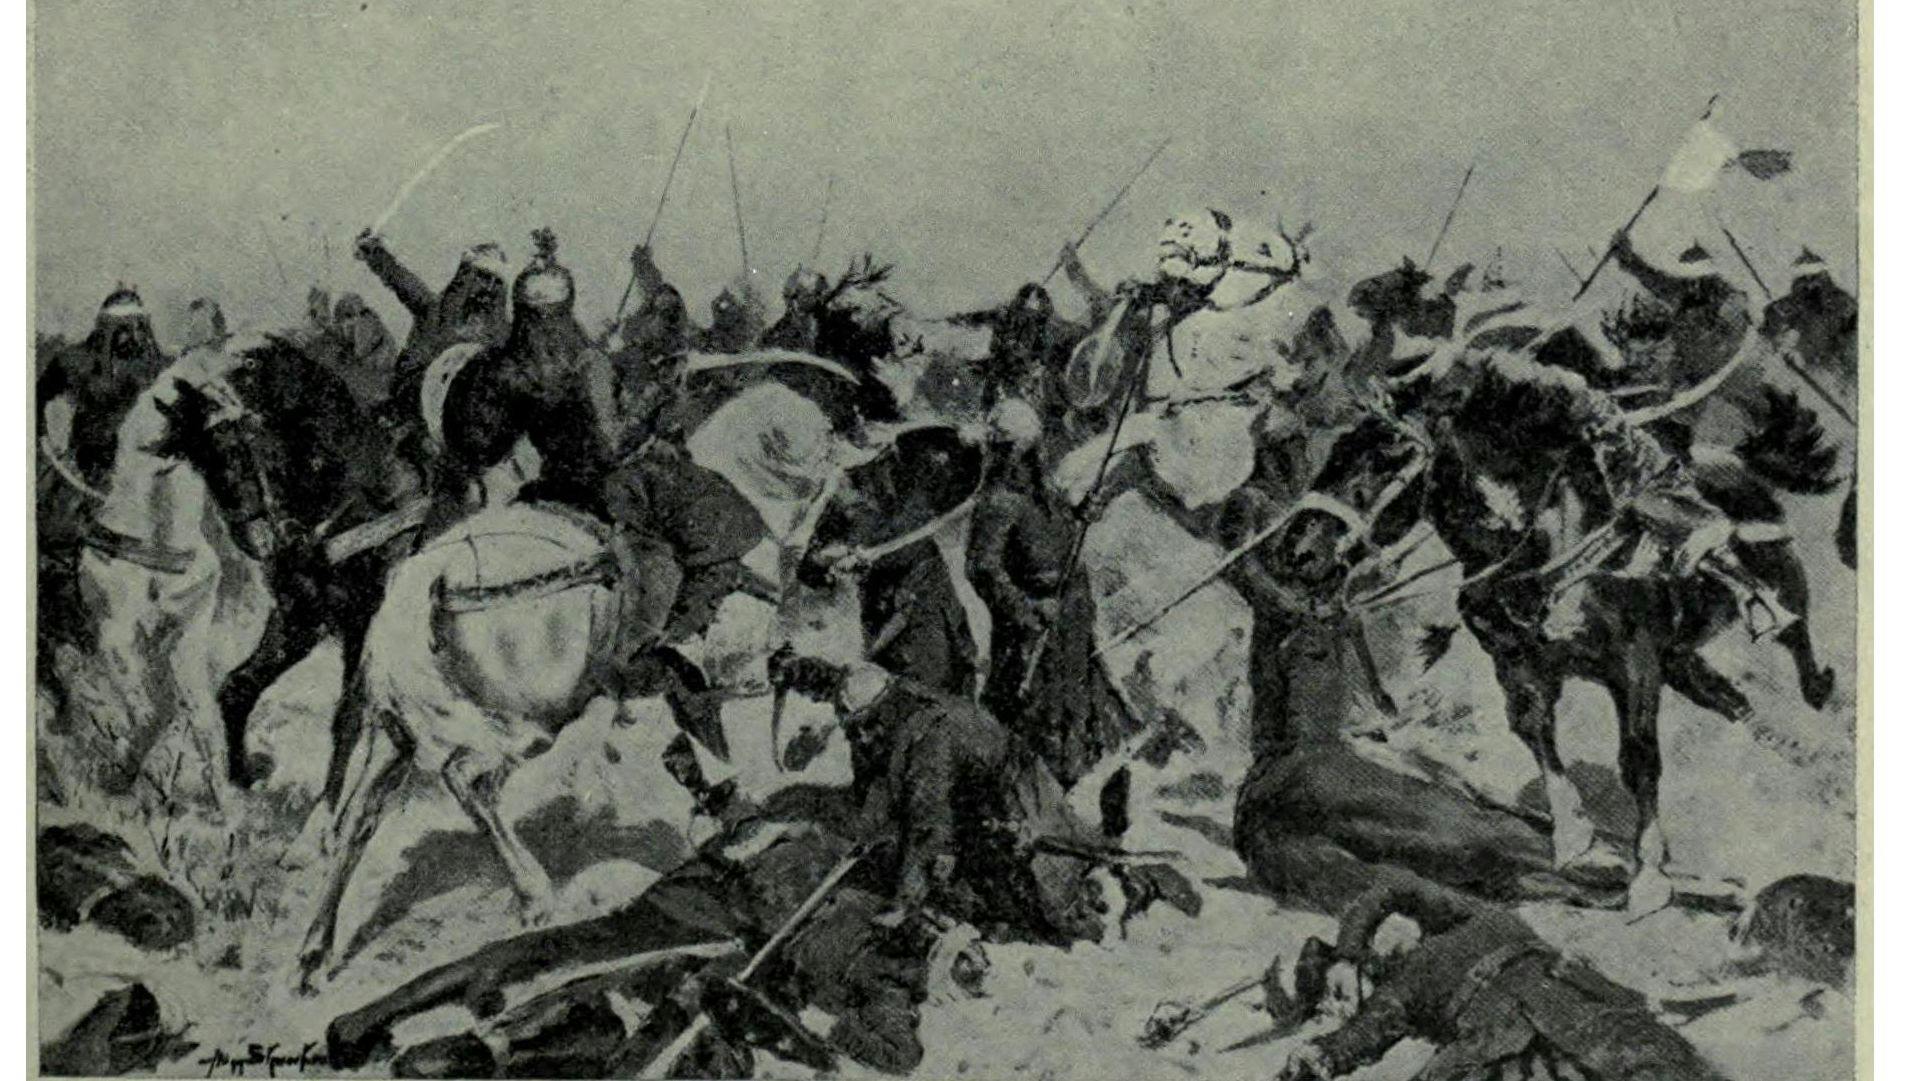 A 19th century re-imagination of Prithviraj Chauhan’s last battle at Tarain